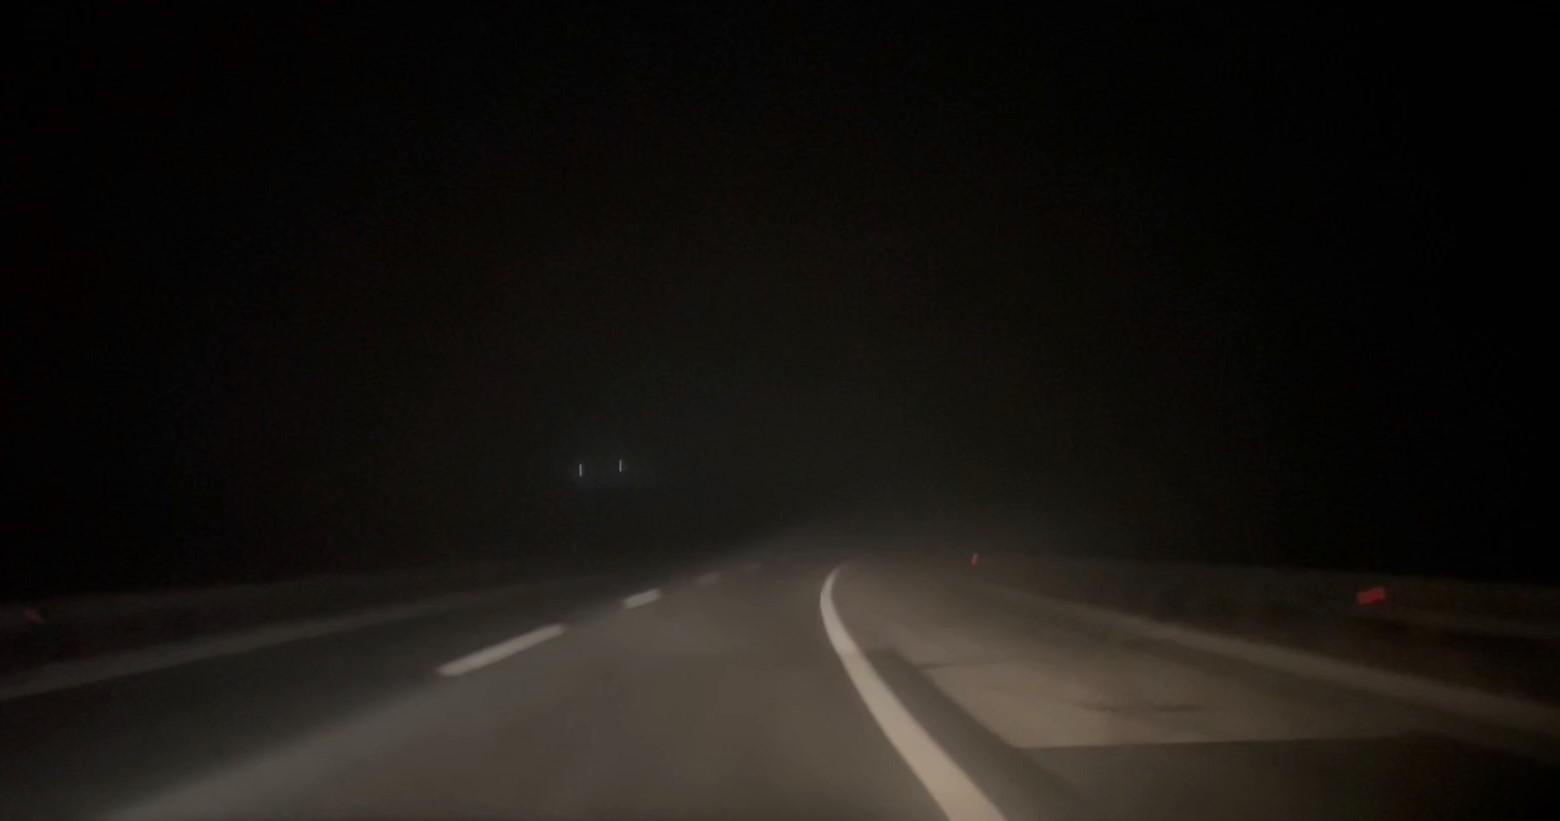 Upozorenje vozačima: Gusta magla smanjuje vidljivost